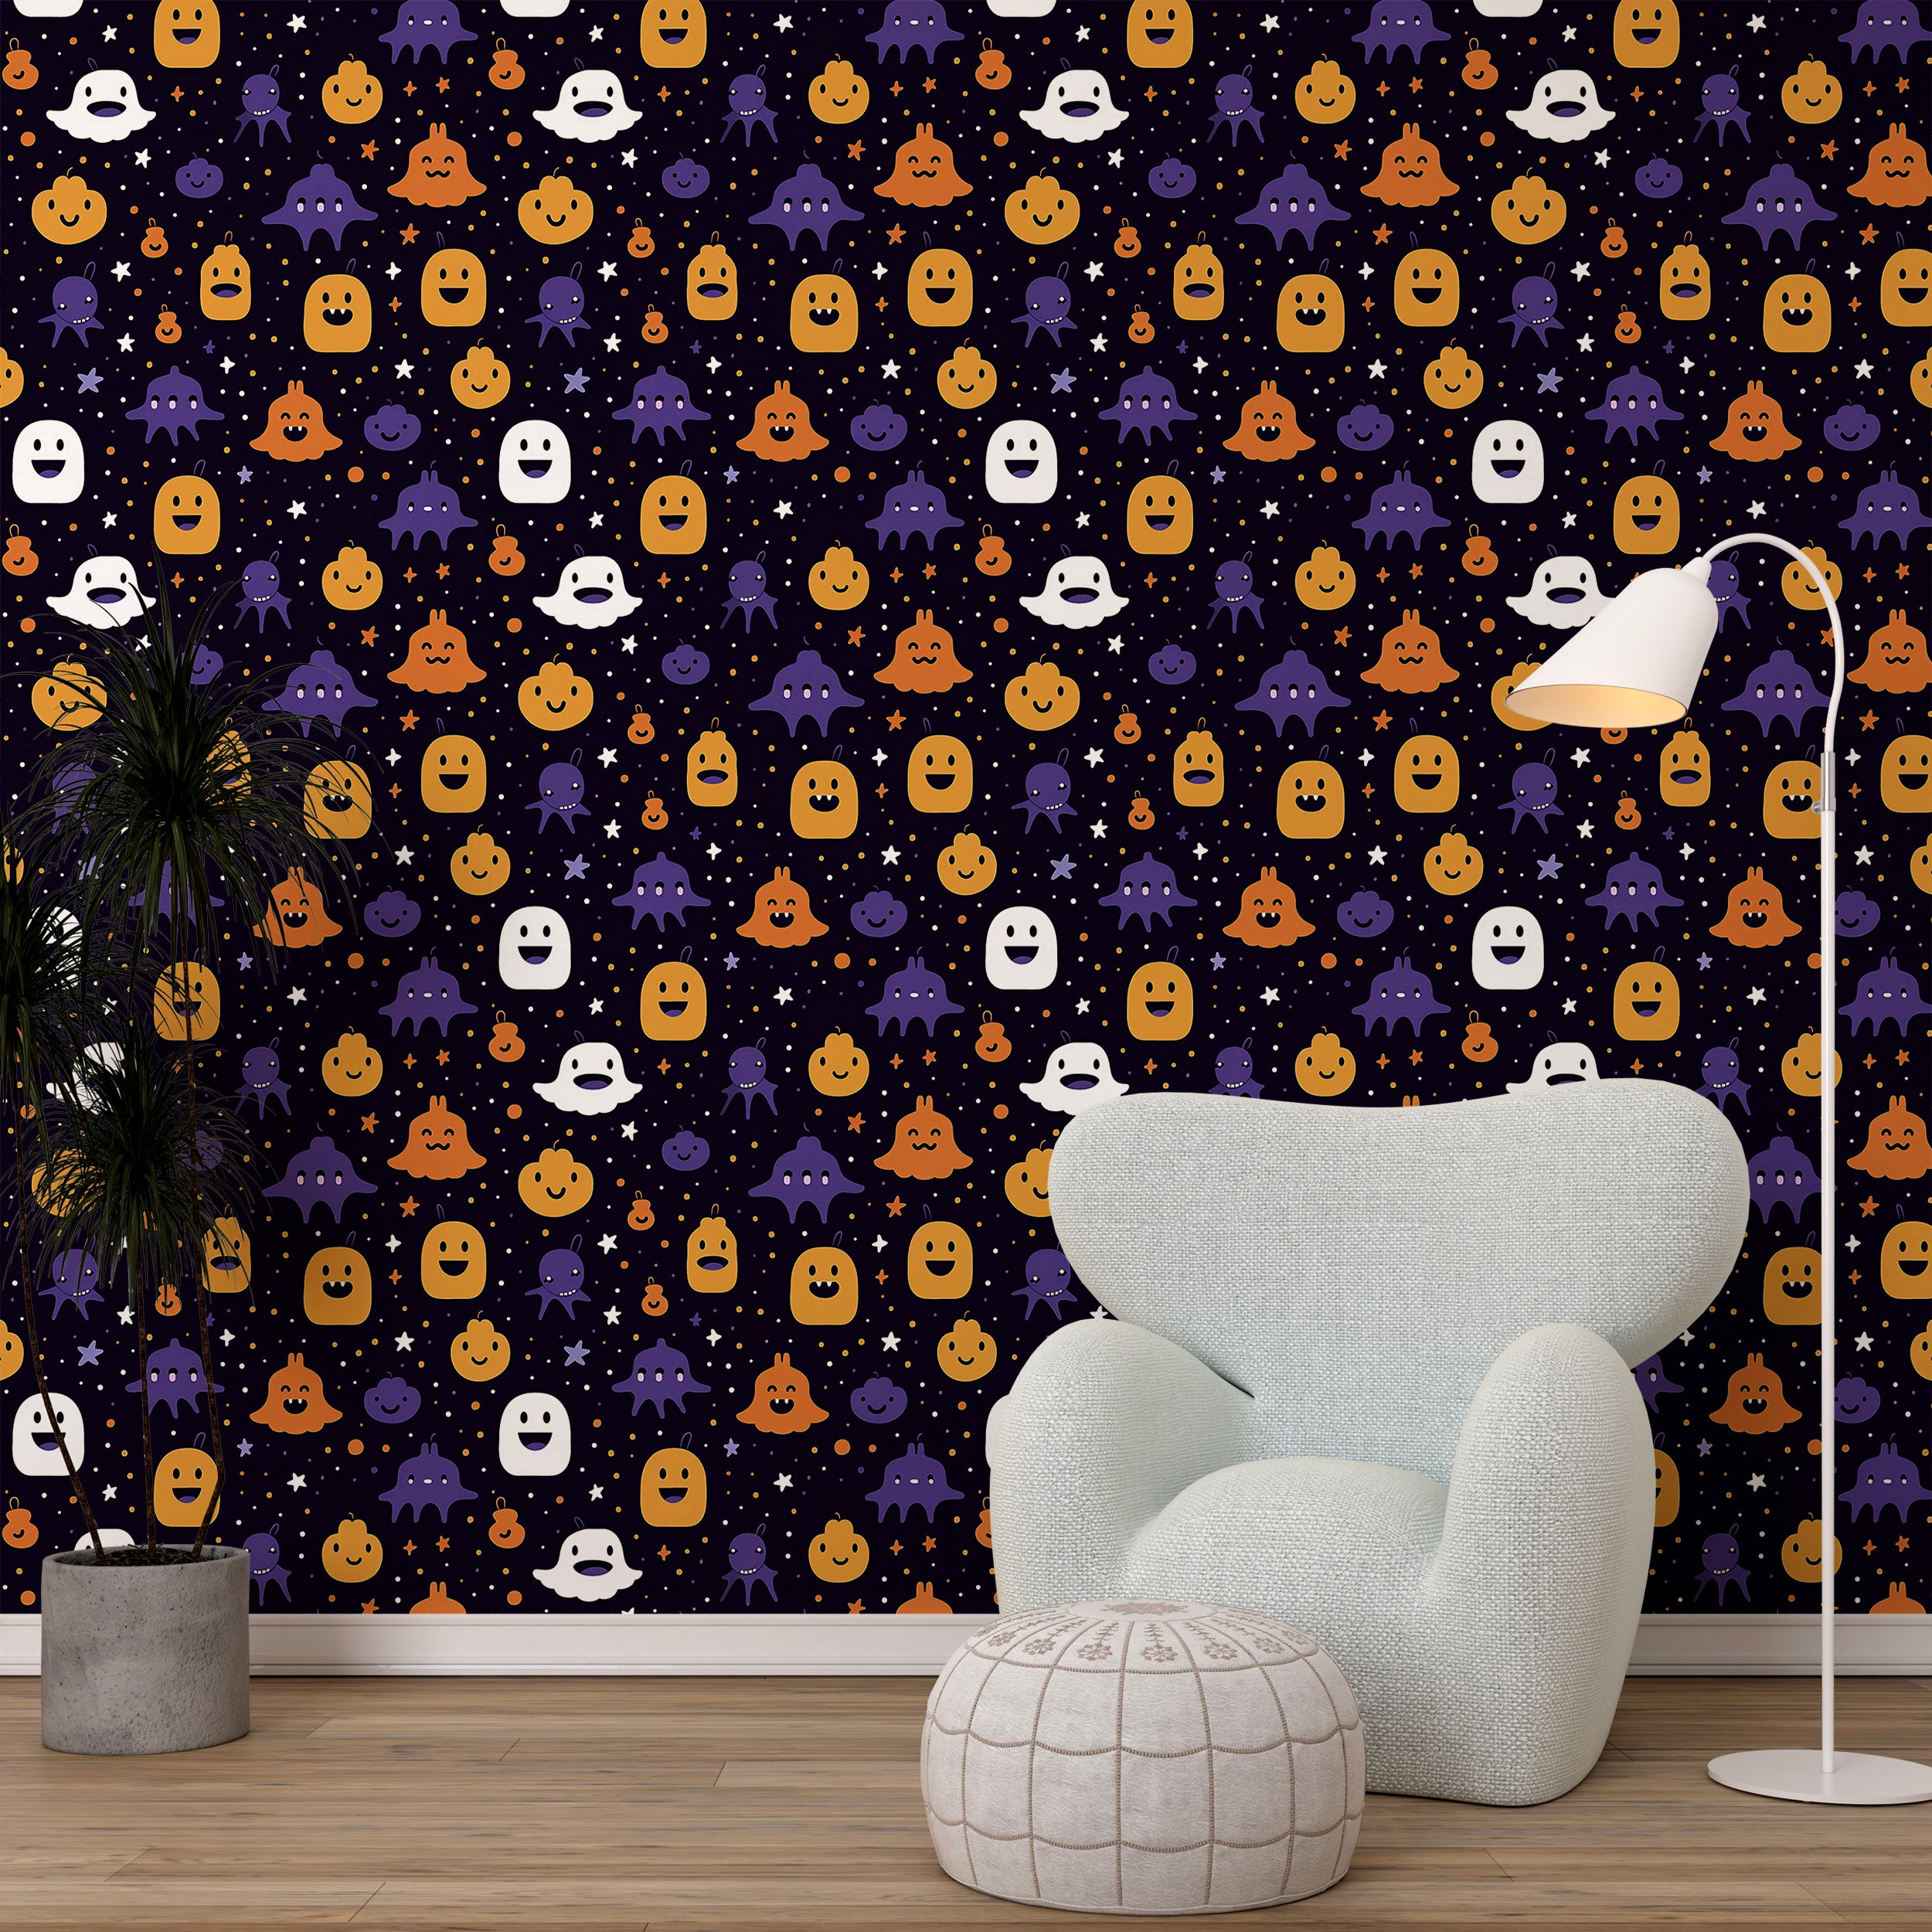 Easy Application of Cute Halloween Wallpaper